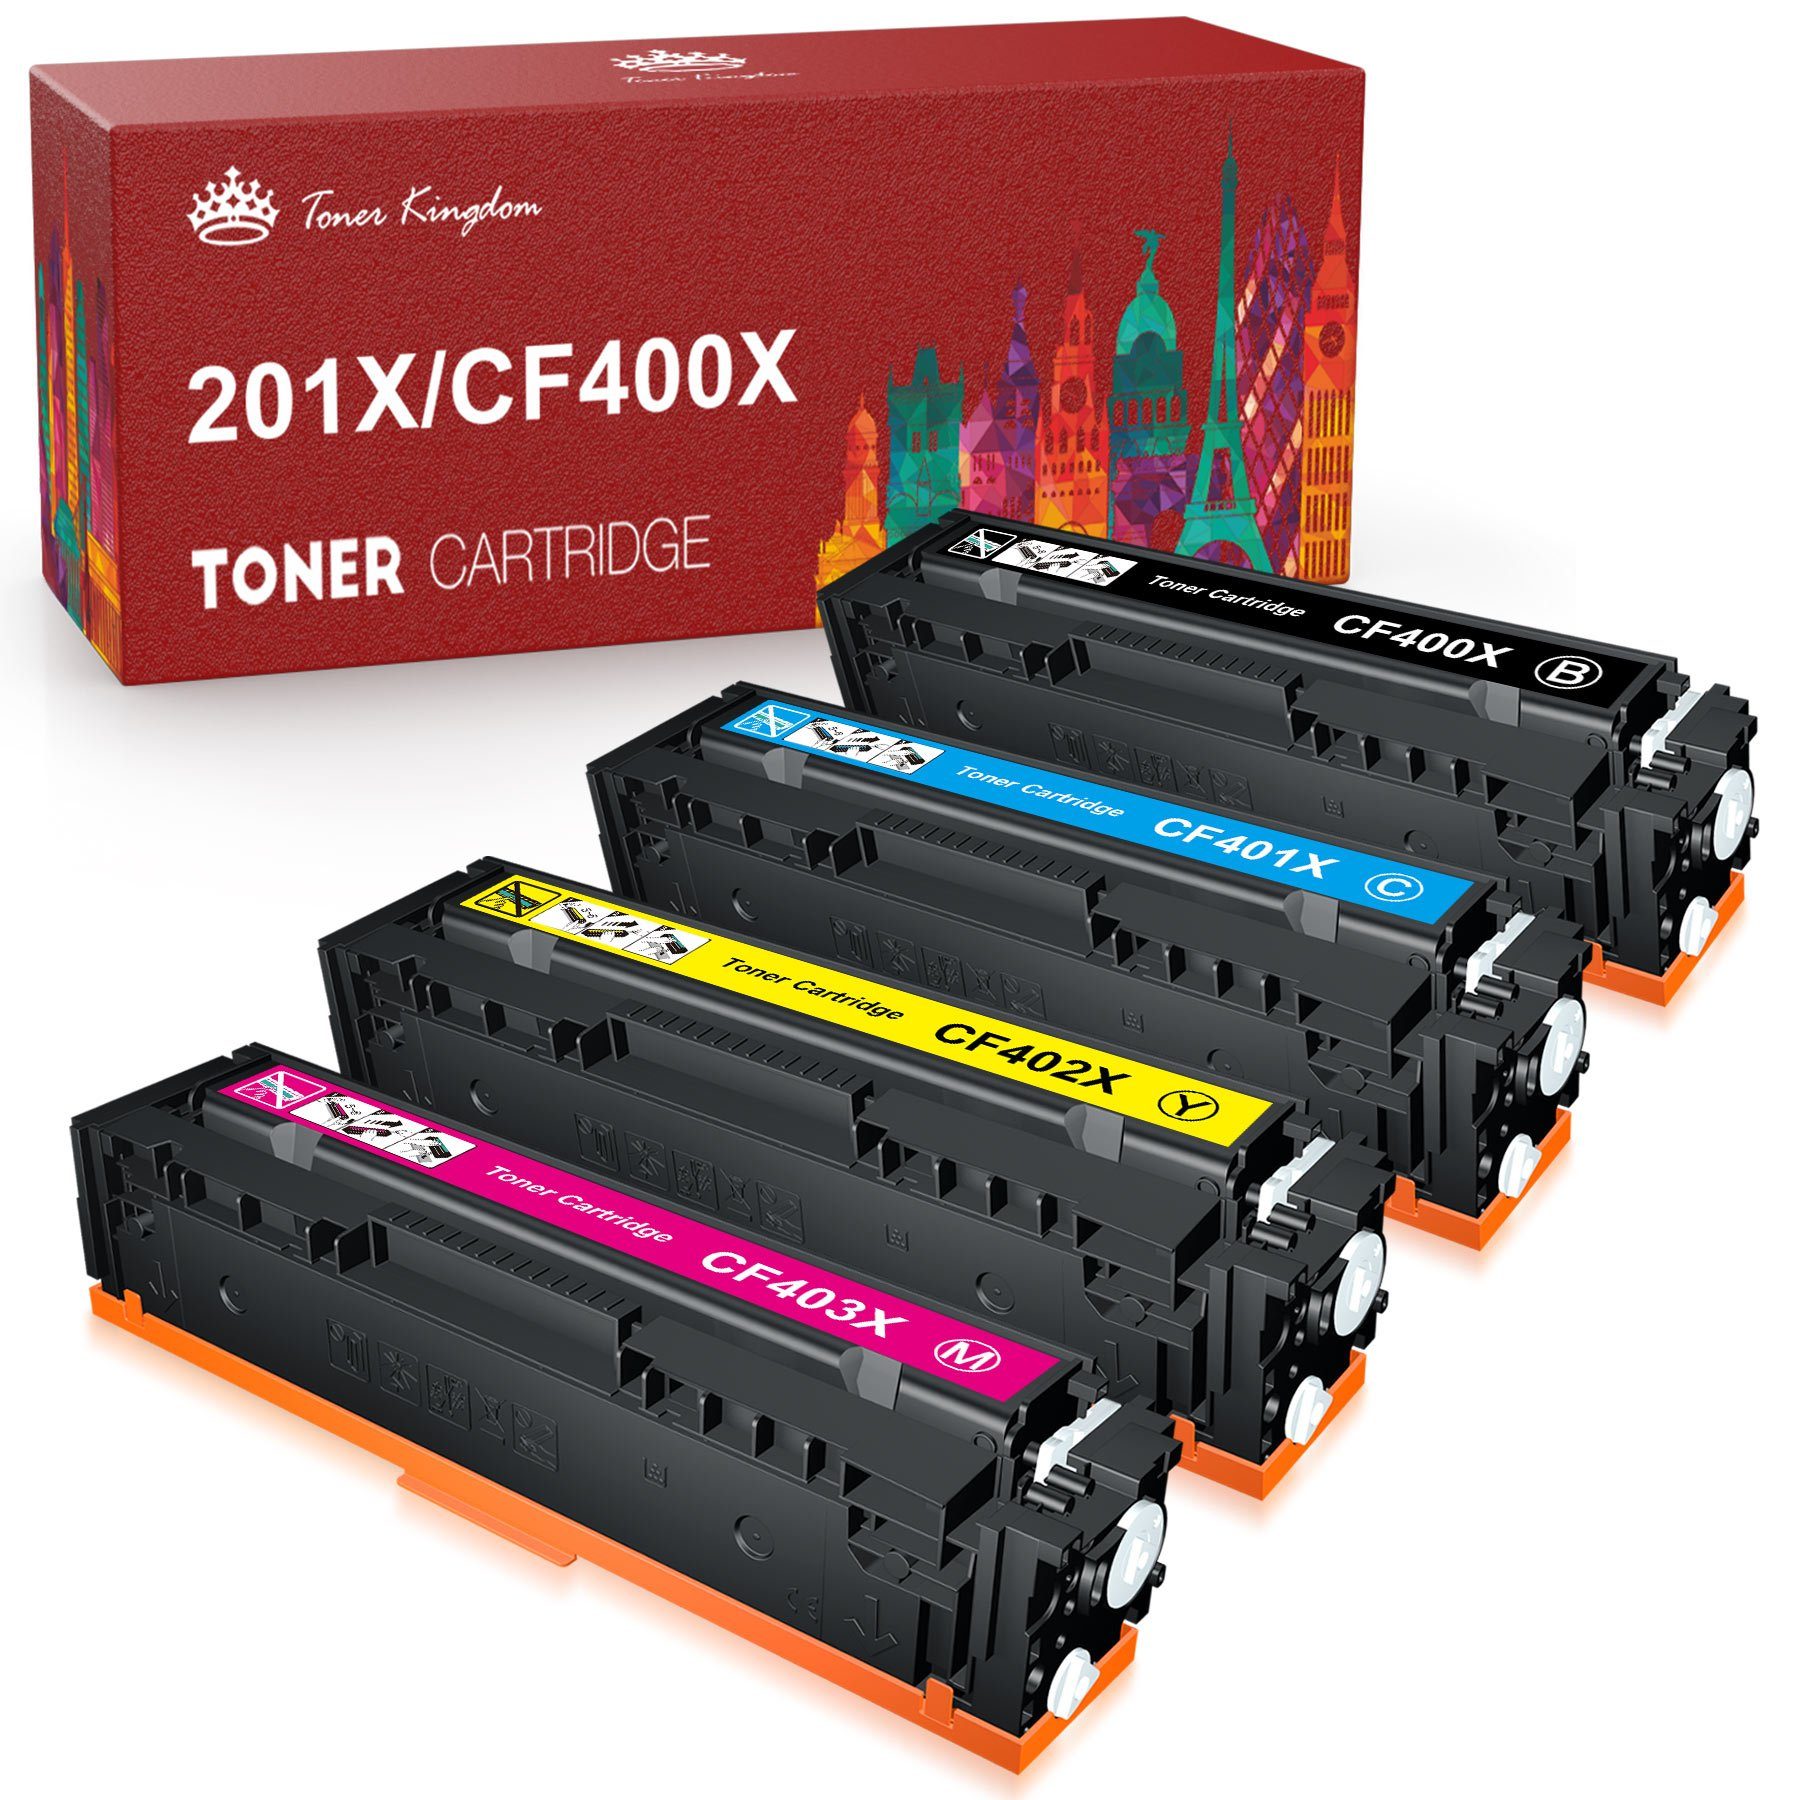 Toner Kingdom Tonerpatrone für HP 201X 201A CF400X CF400A MFP M277dw